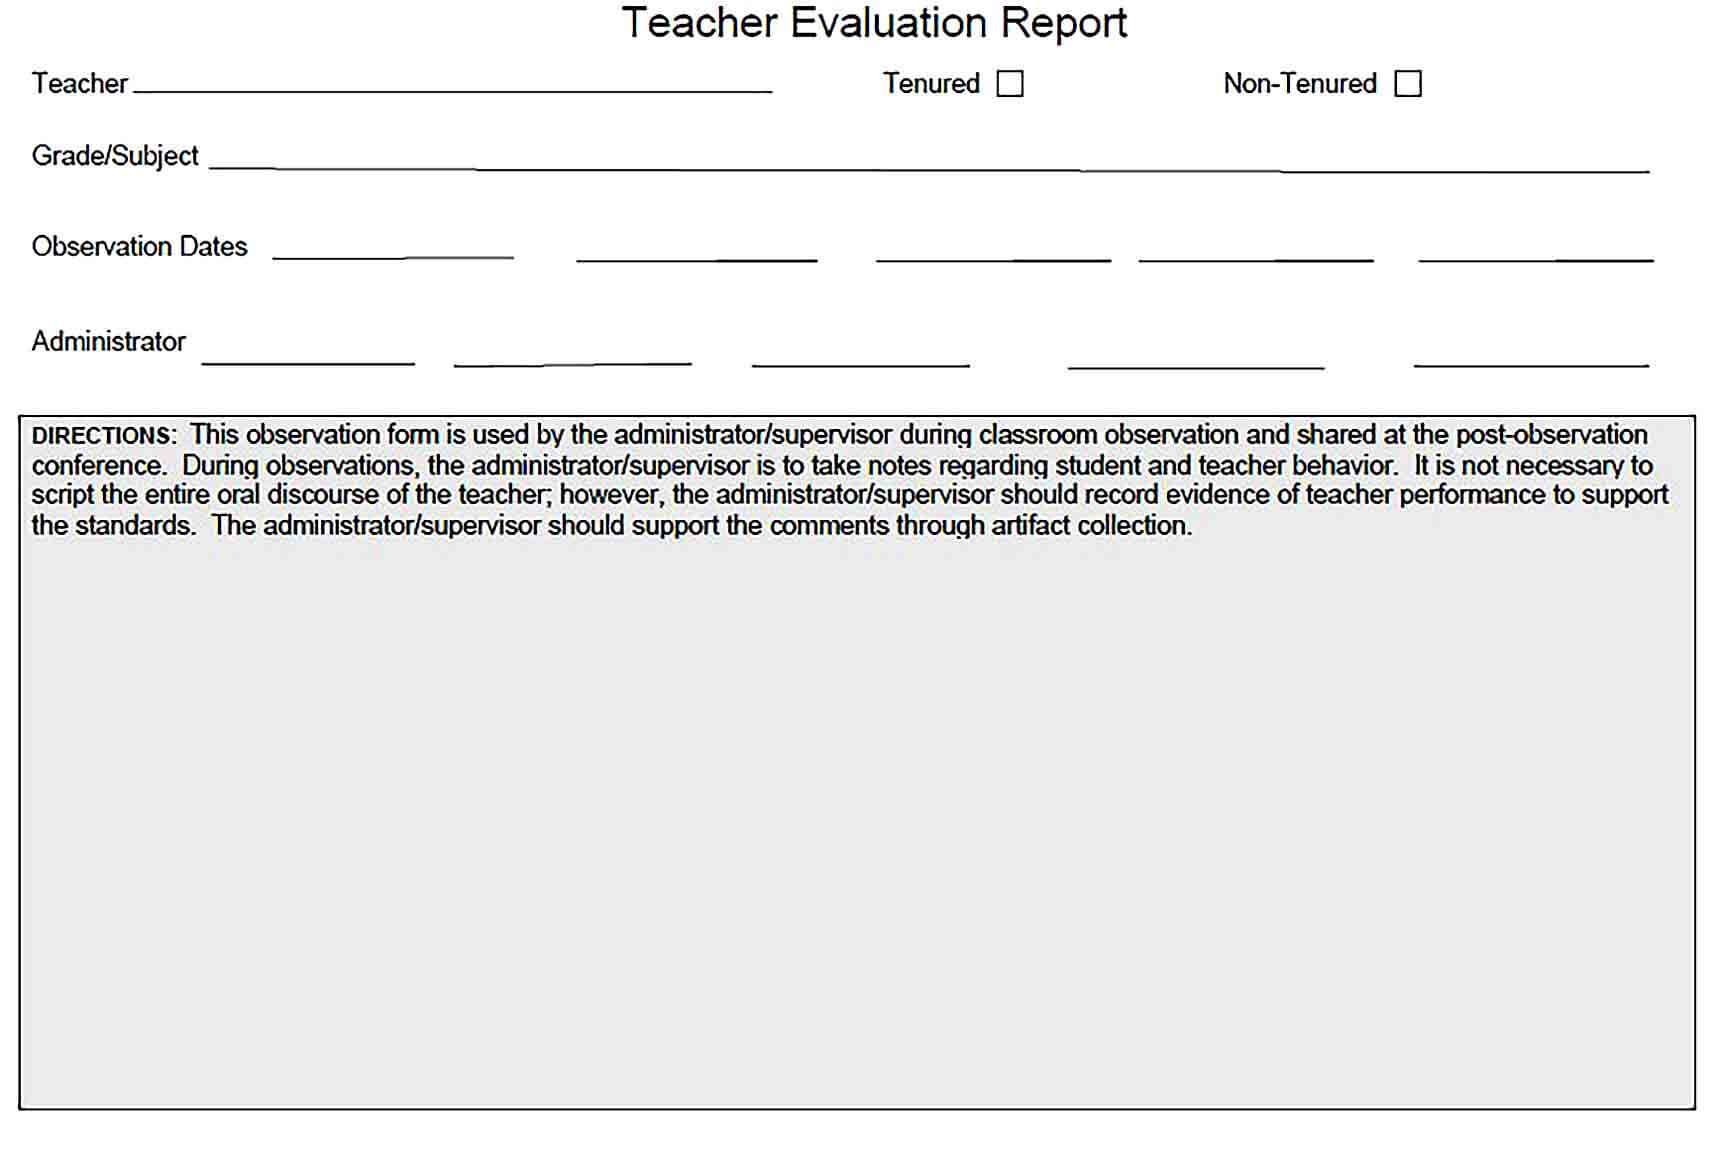 Sample Teacher Evaluation